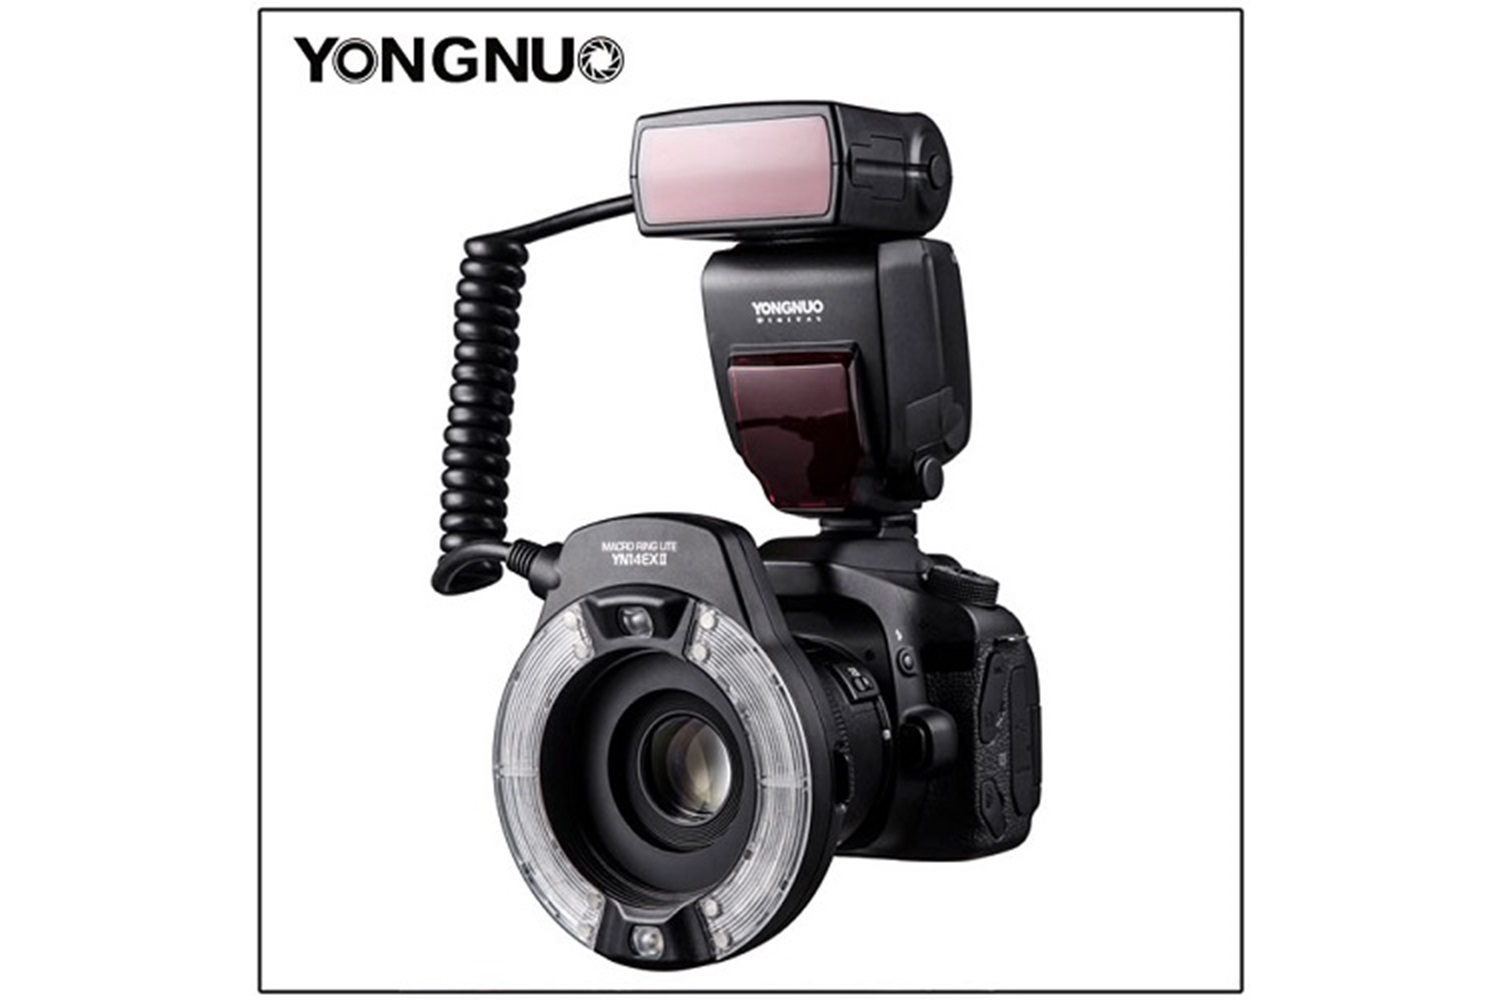 Yongnuo YN14-EX II Canon Uyumlu Makro Ring Flaş